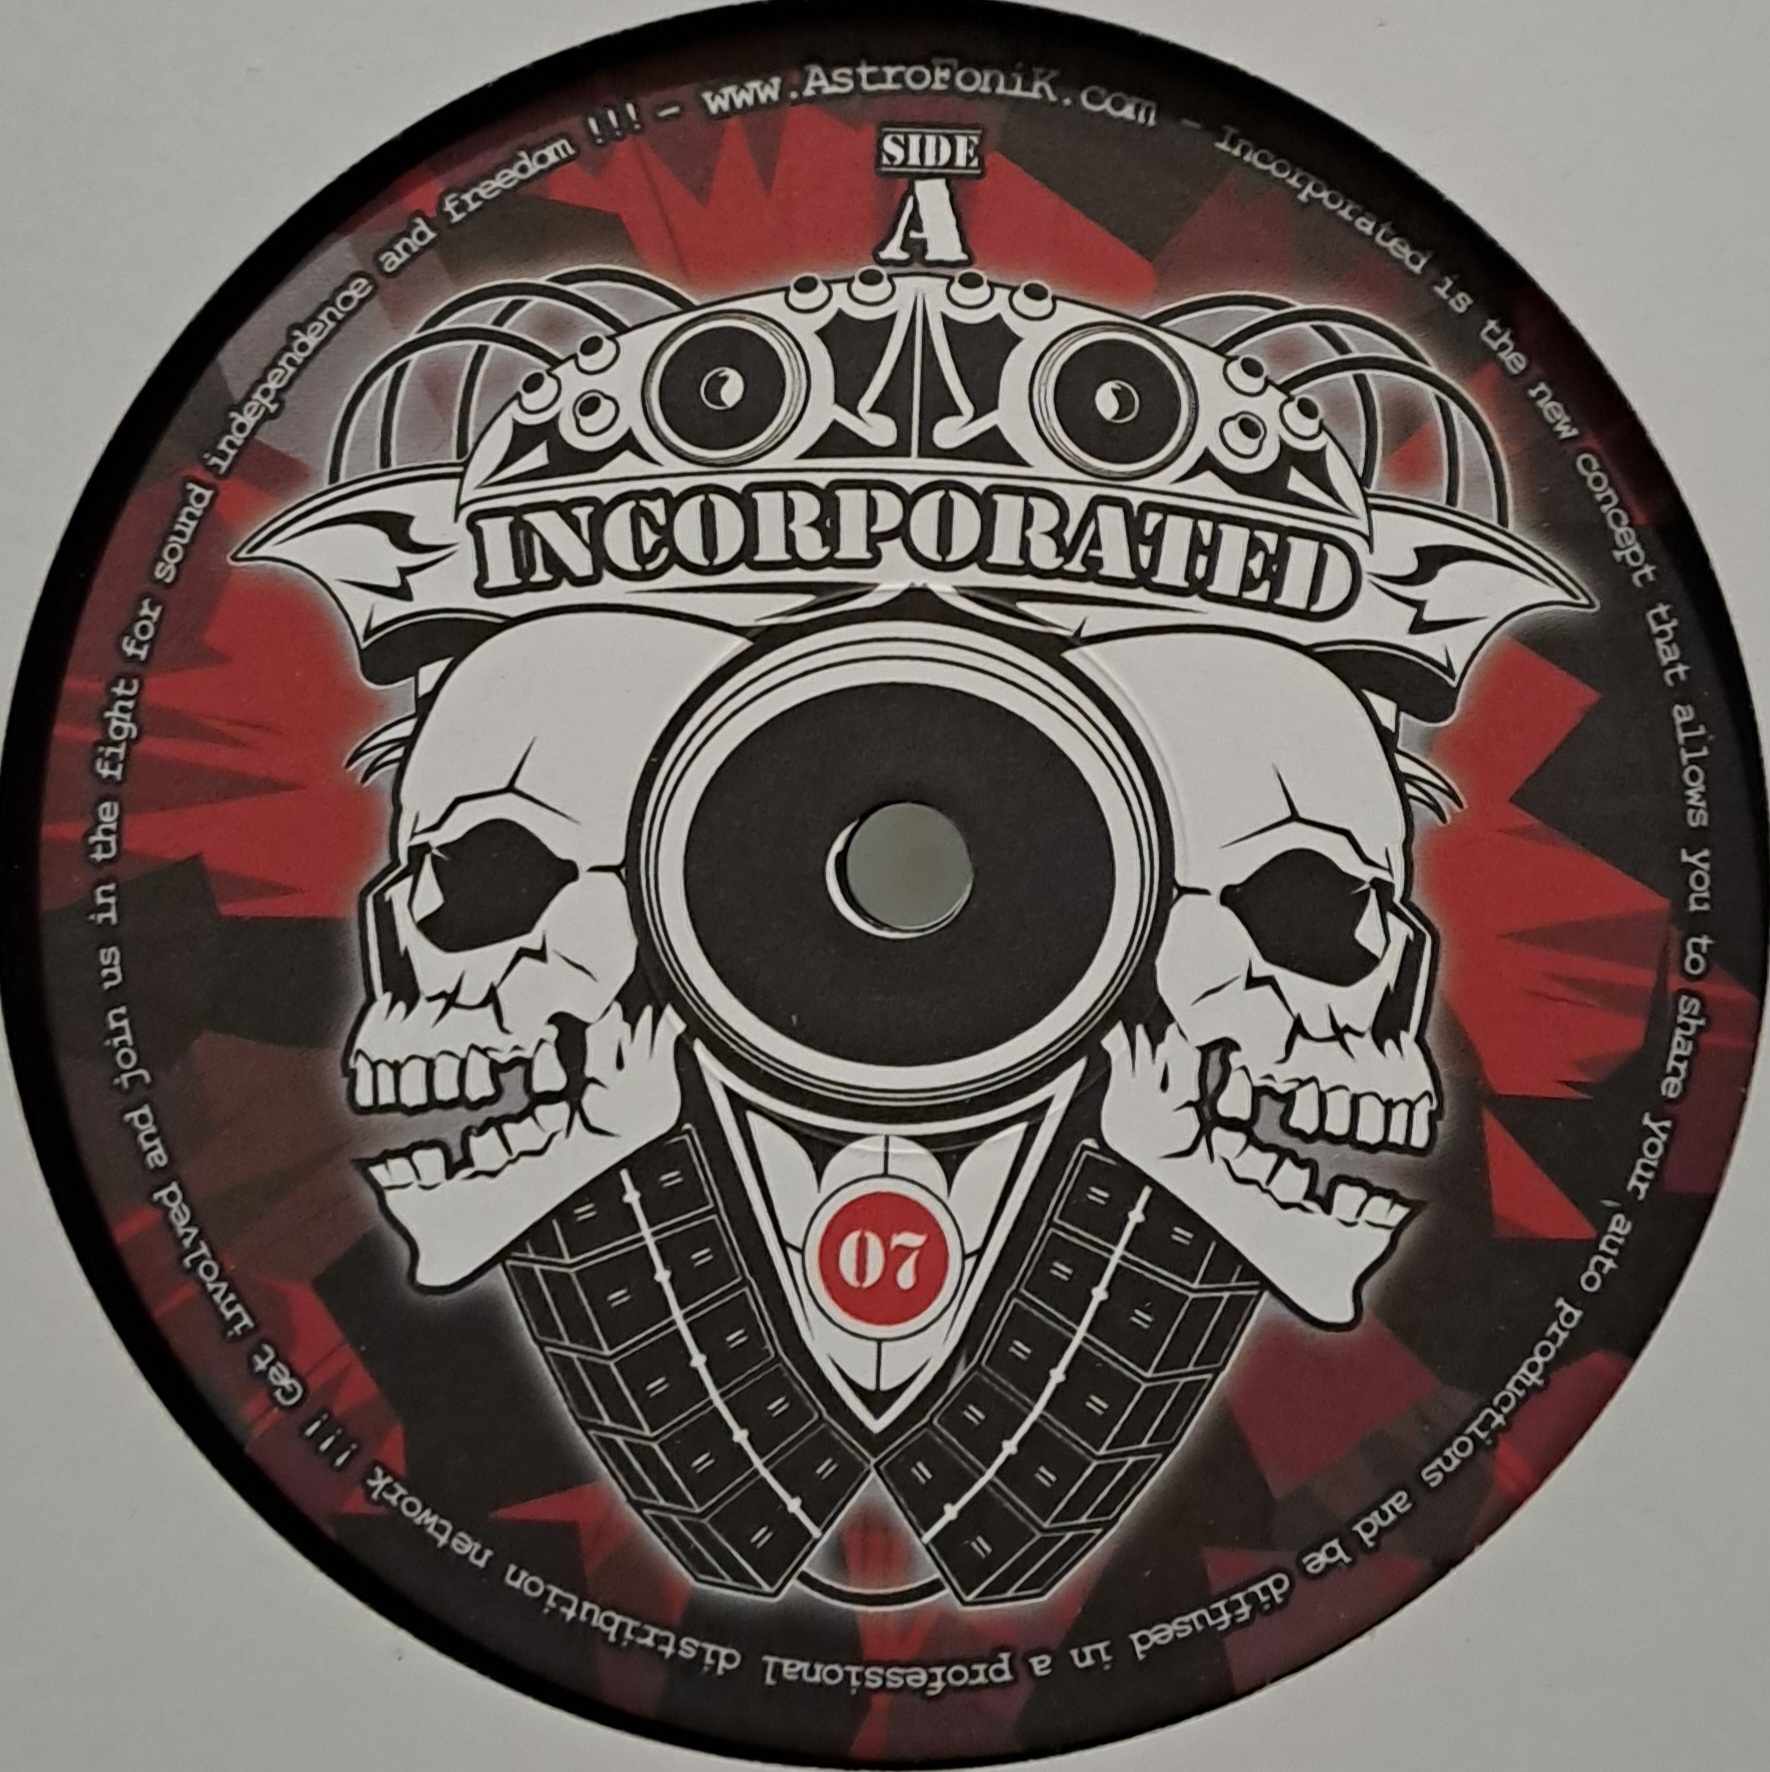 Incorporated 07 - vinyle tribecore